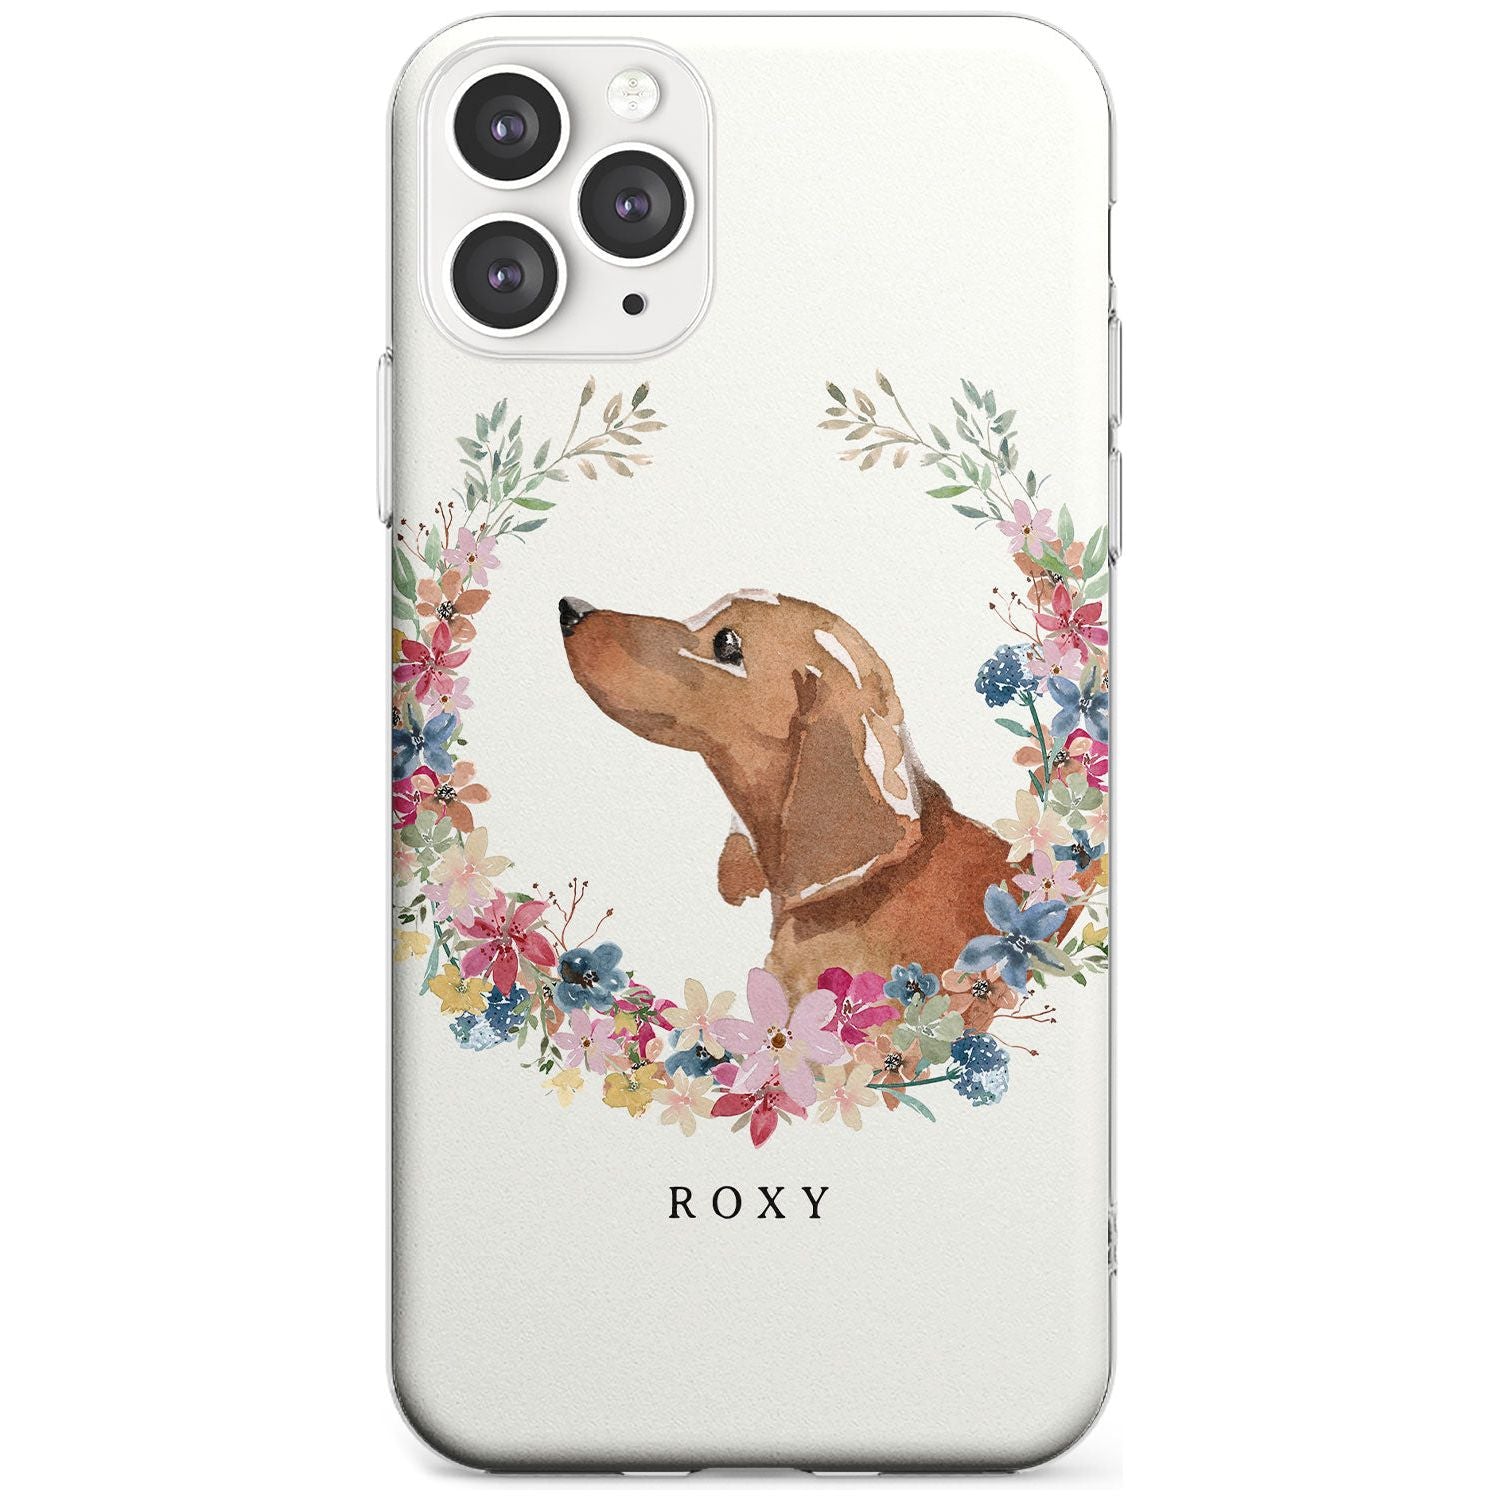 Tan Dachshund - Watercolour Dog Portrait Slim TPU Phone Case for iPhone 11 Pro Max